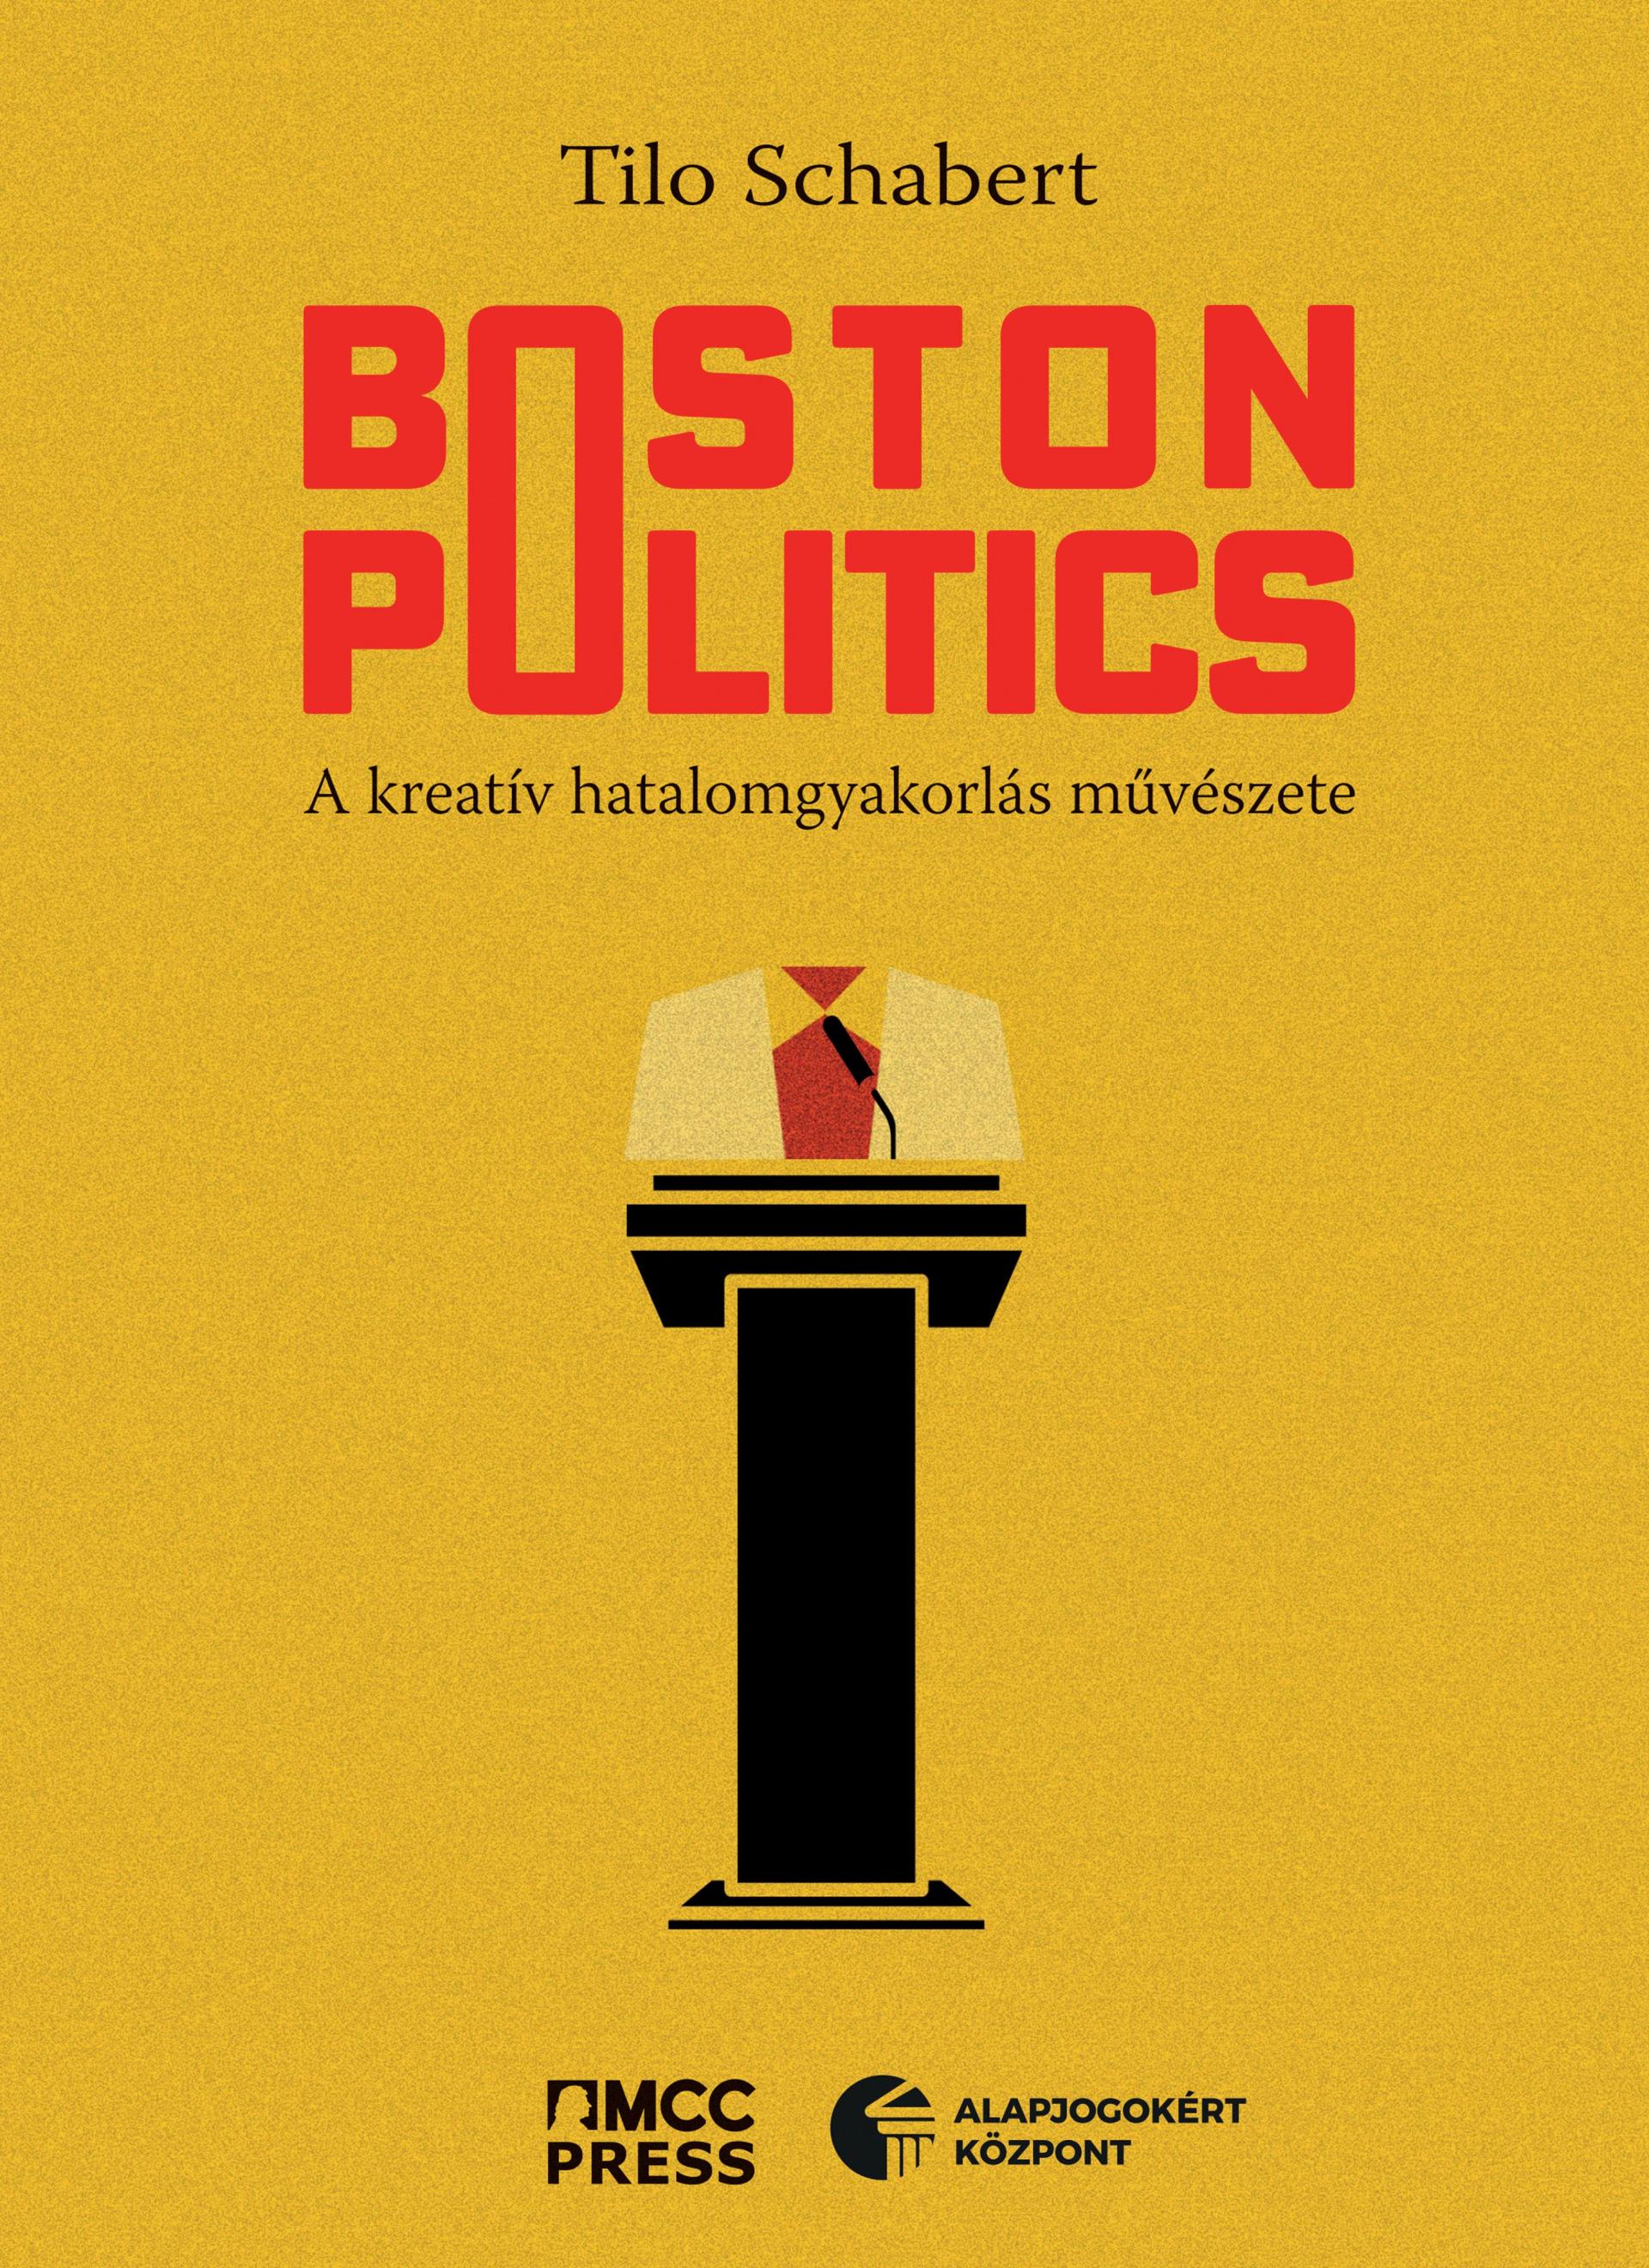 Boston Politics